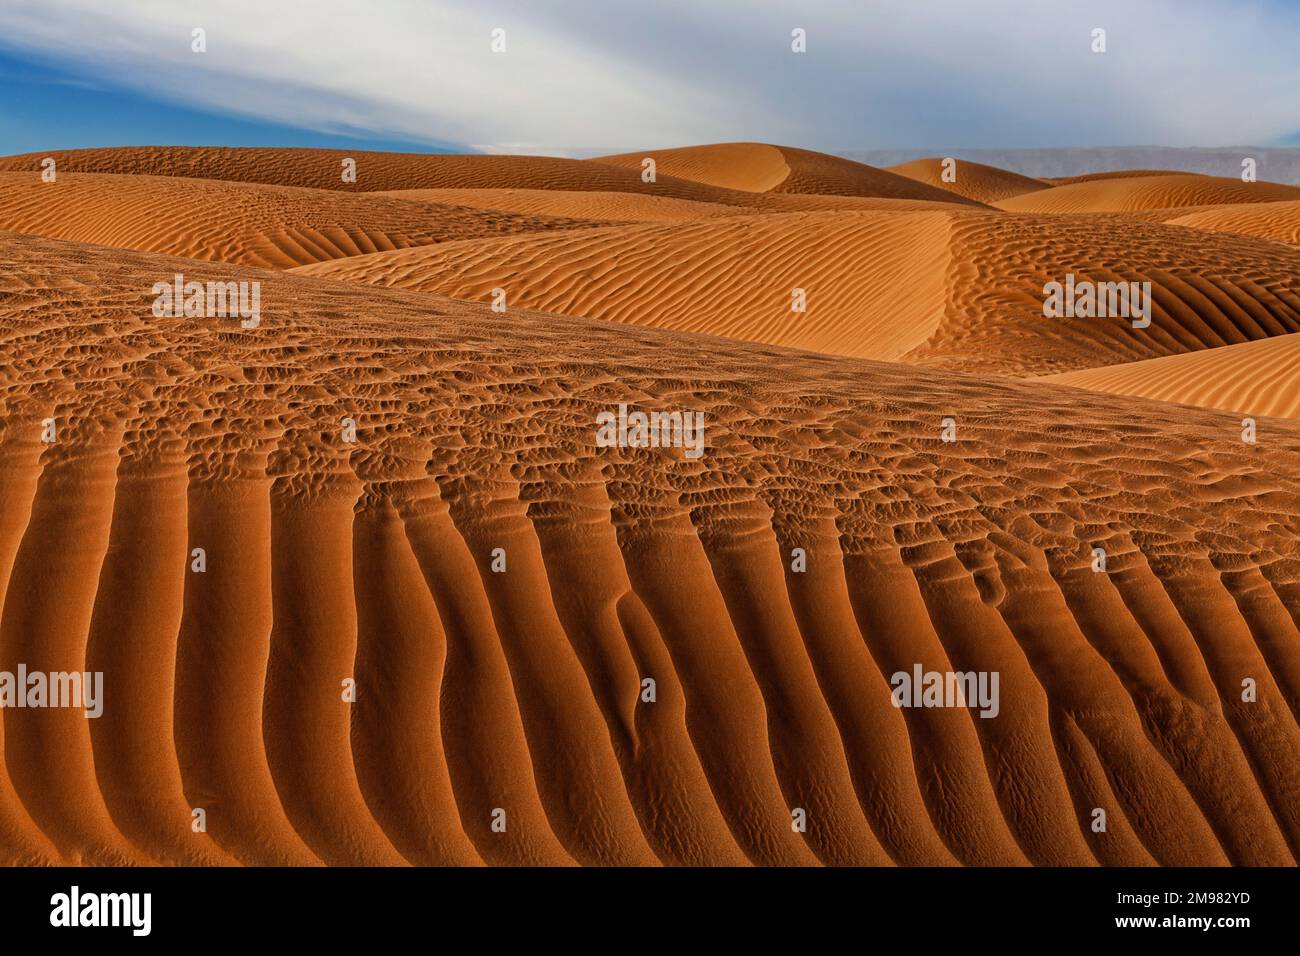 Close-up of rippled sand dunes in desert landscape, Saudi Arabia Stock Photo